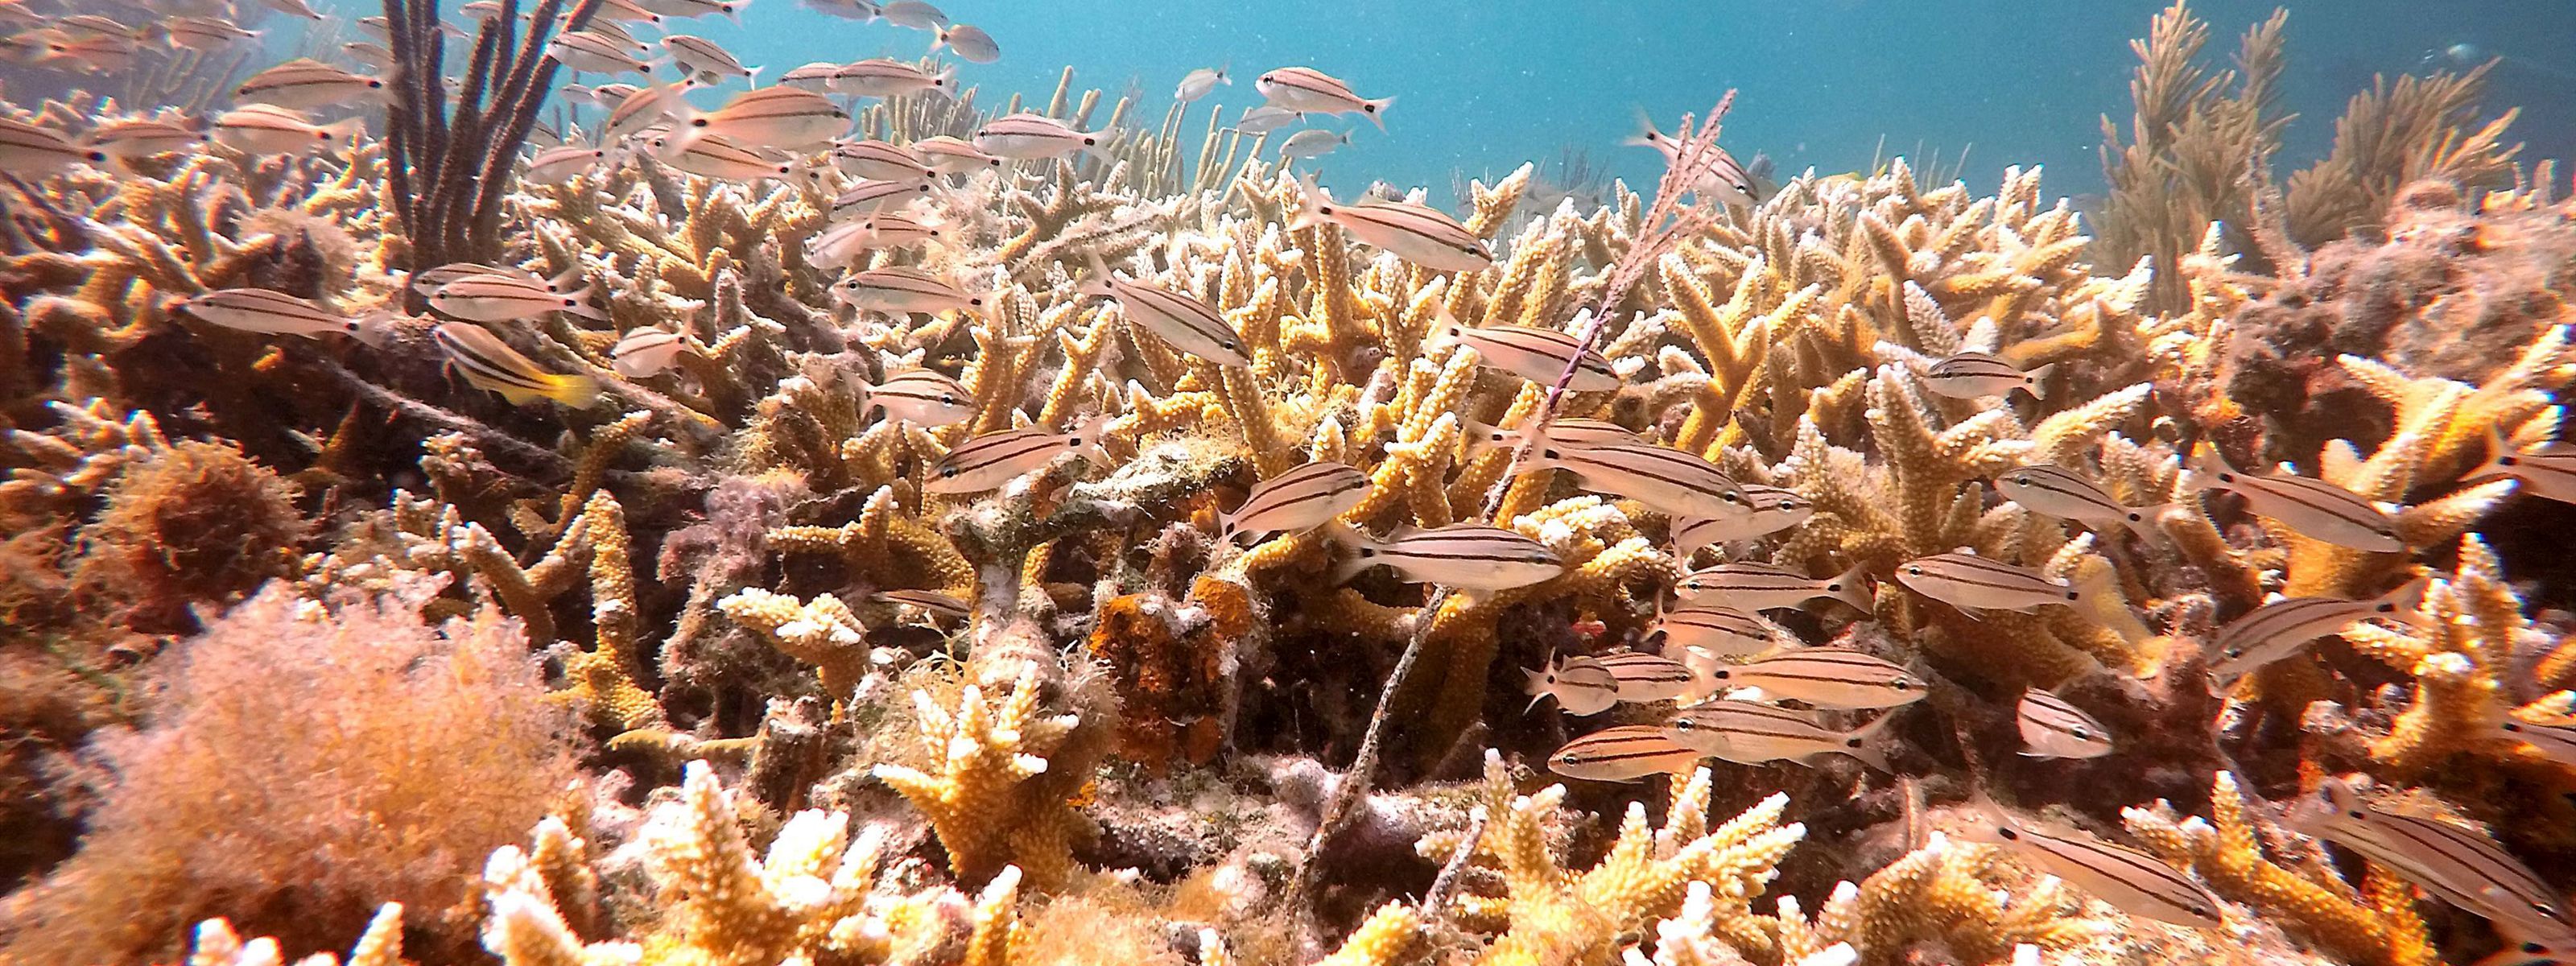 Pulaski Reef in the Dry Tortugas.